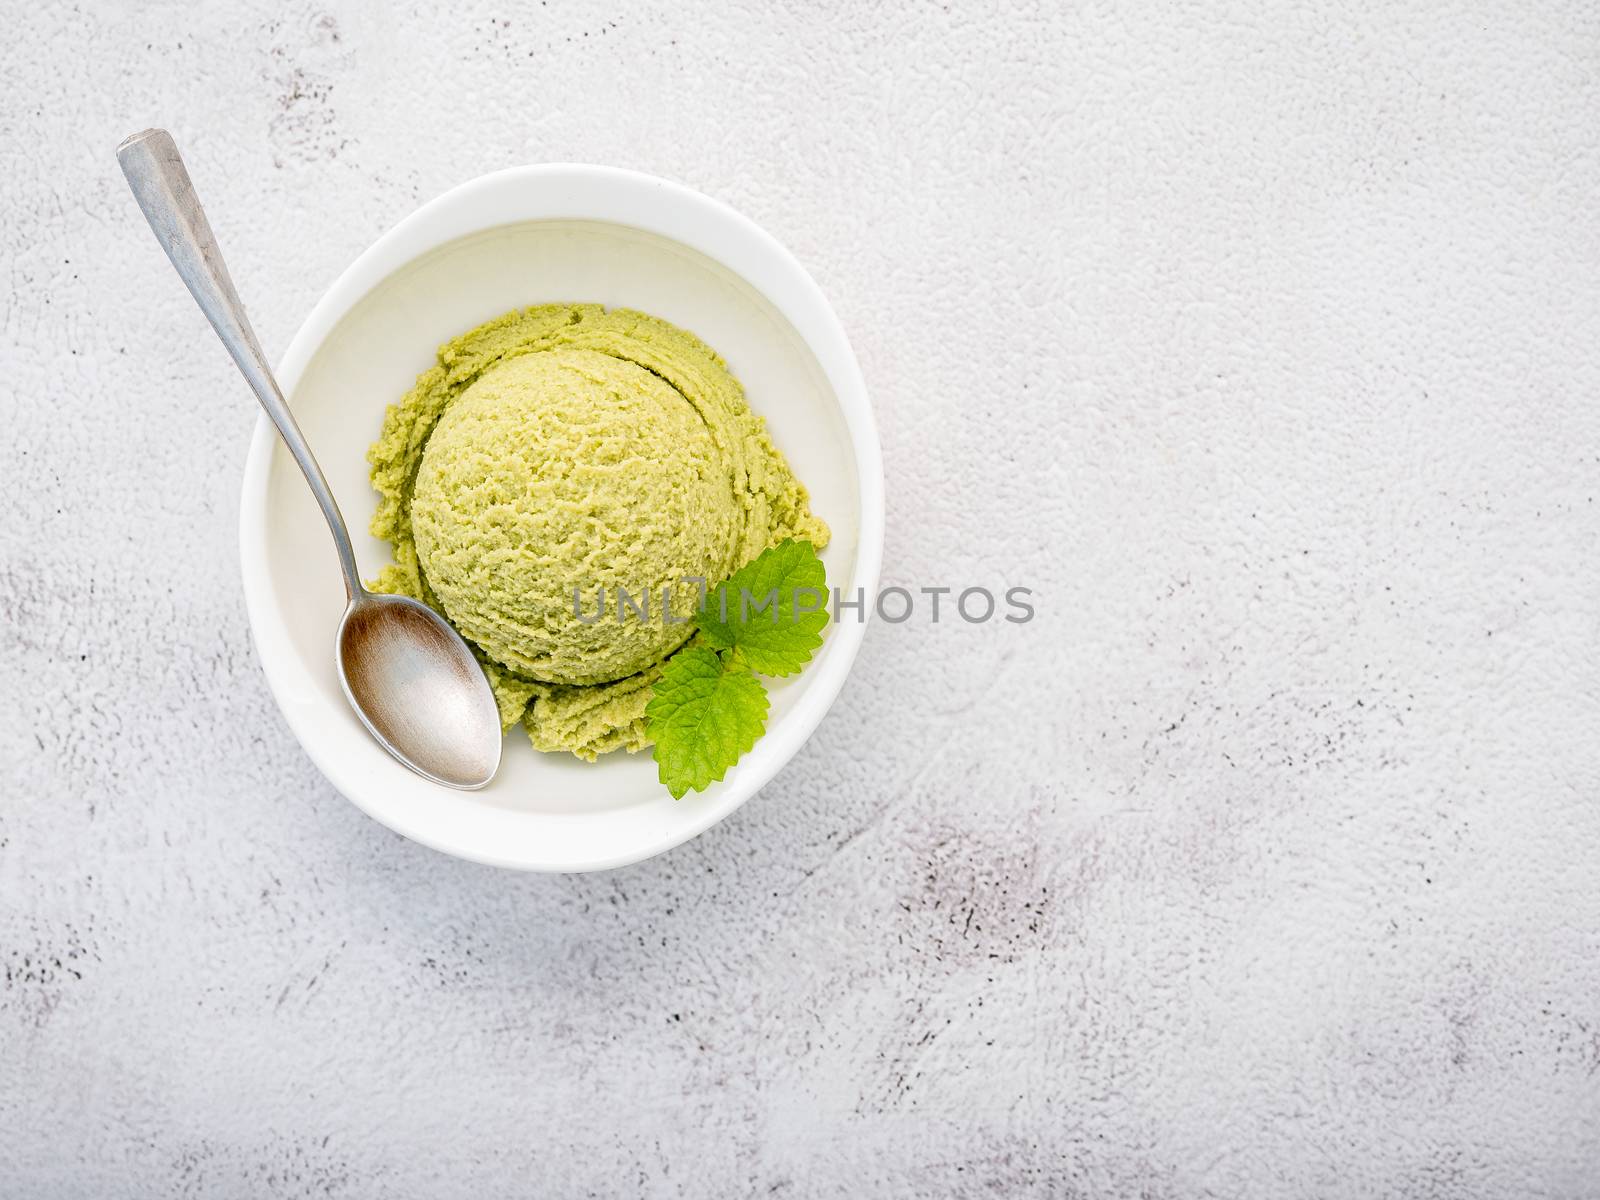 Matcha green tea ice cream with matcha whisk brush  setup on white stone background . Summer and Sweet menu concept.